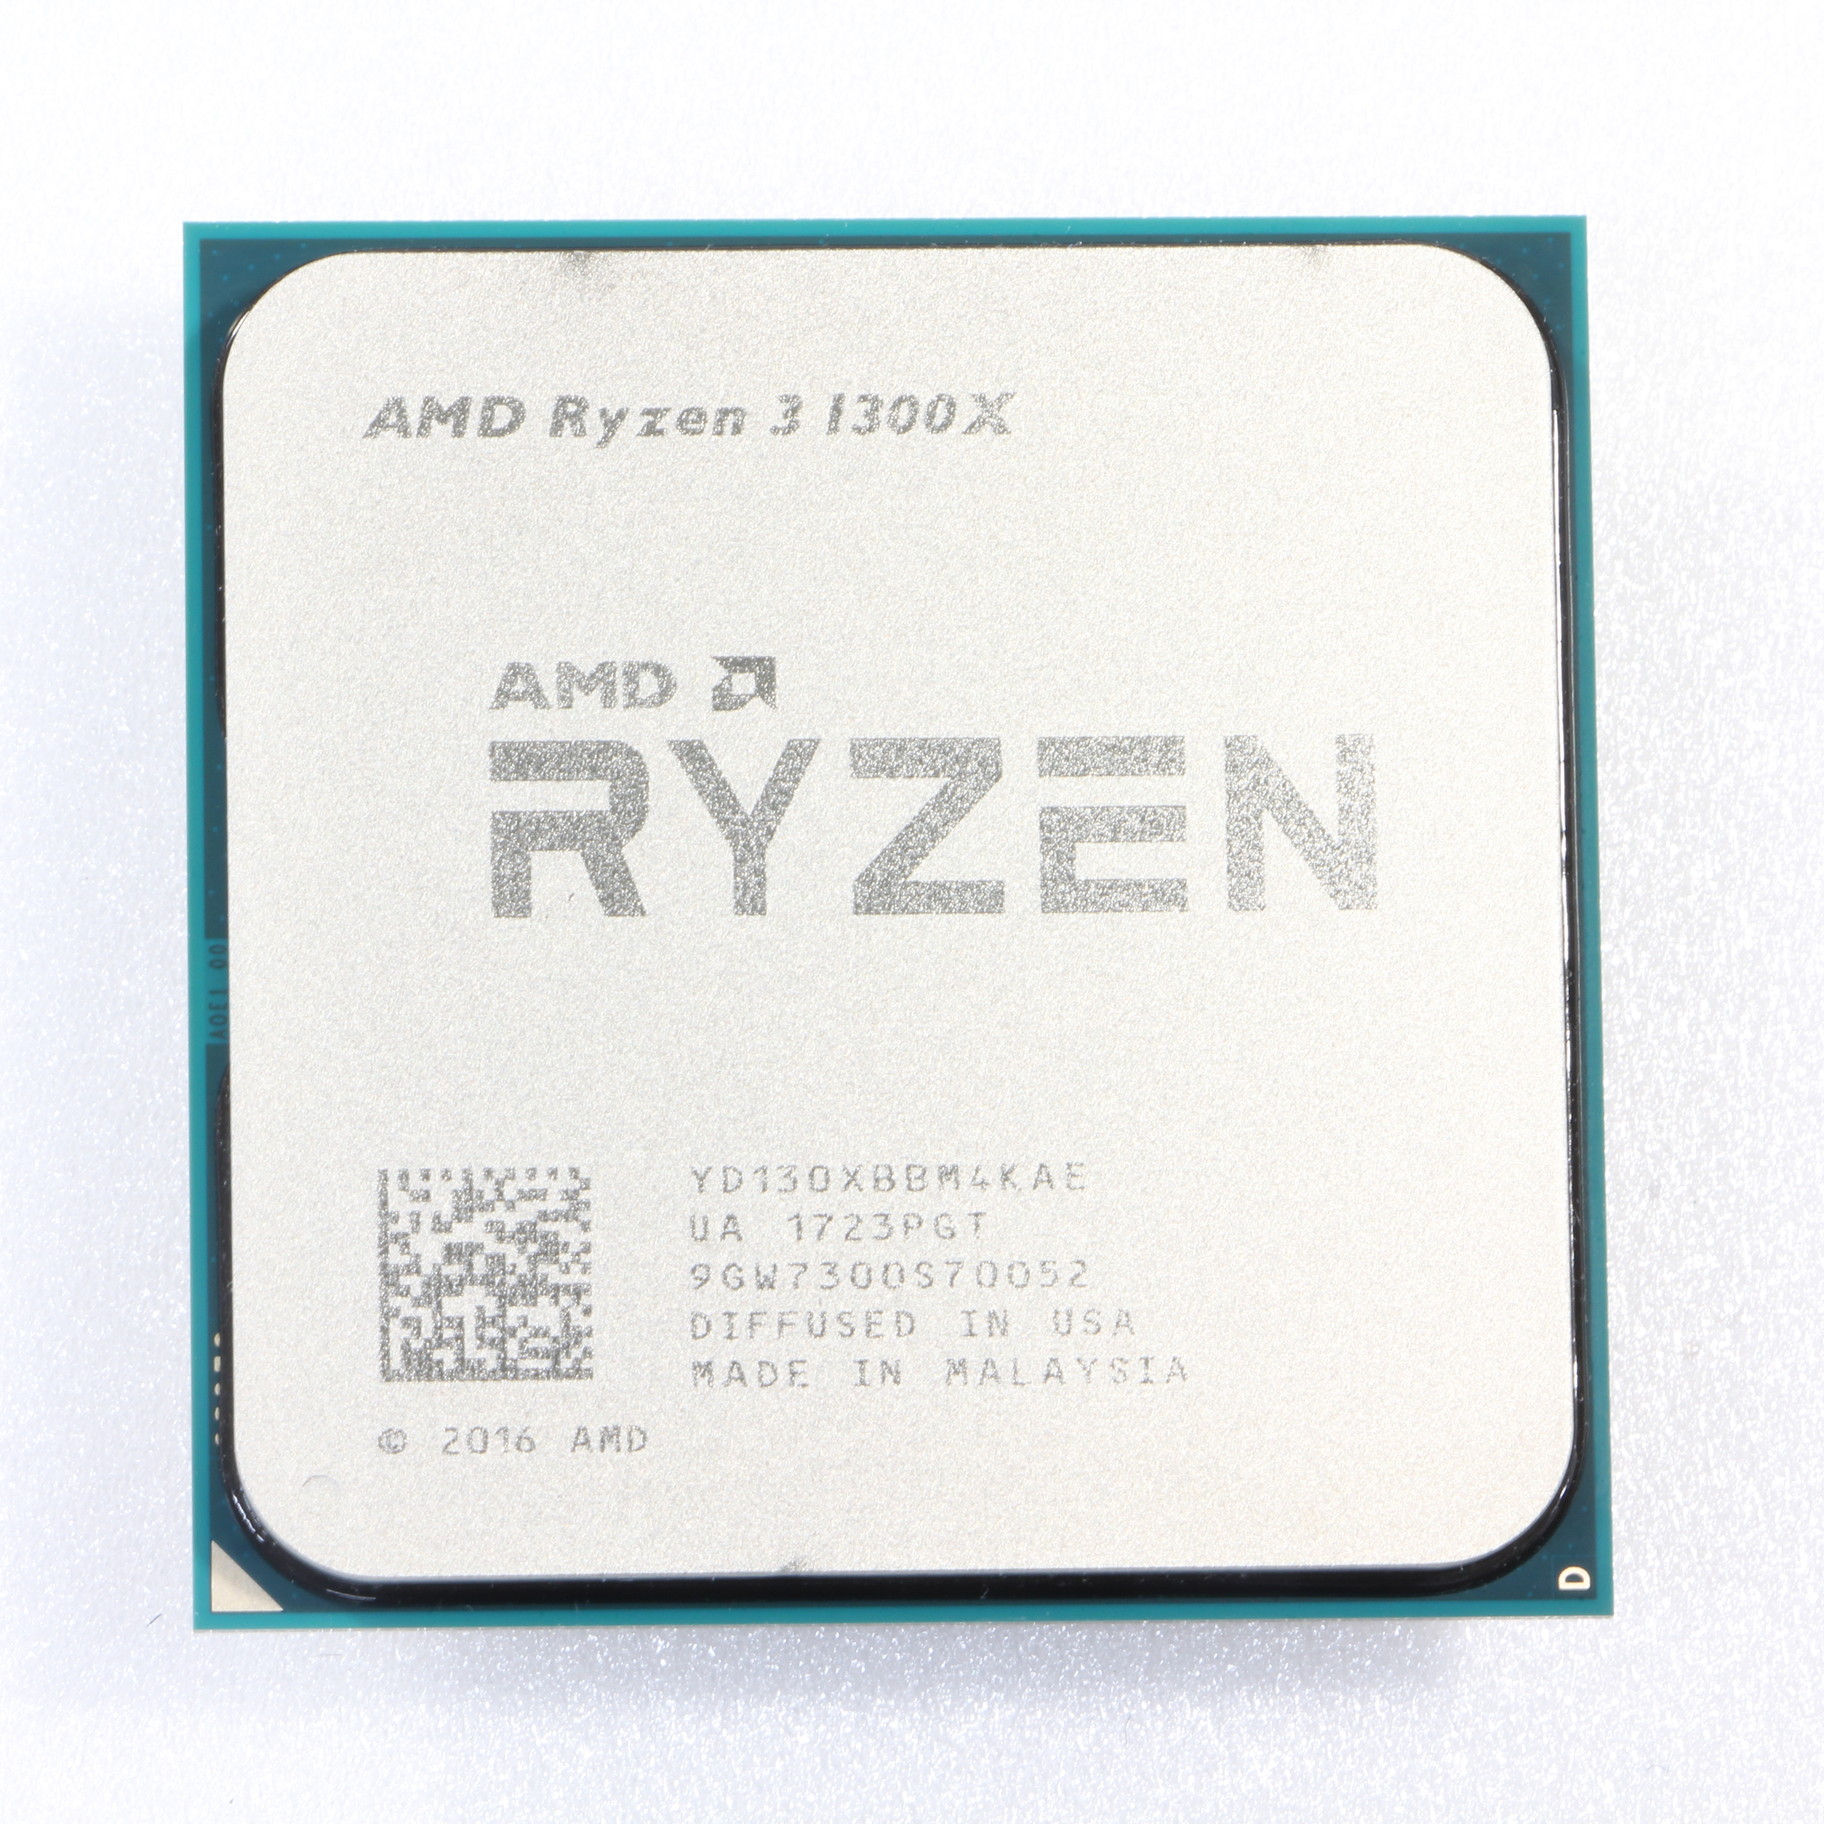 AMD Ryzen3 1300X